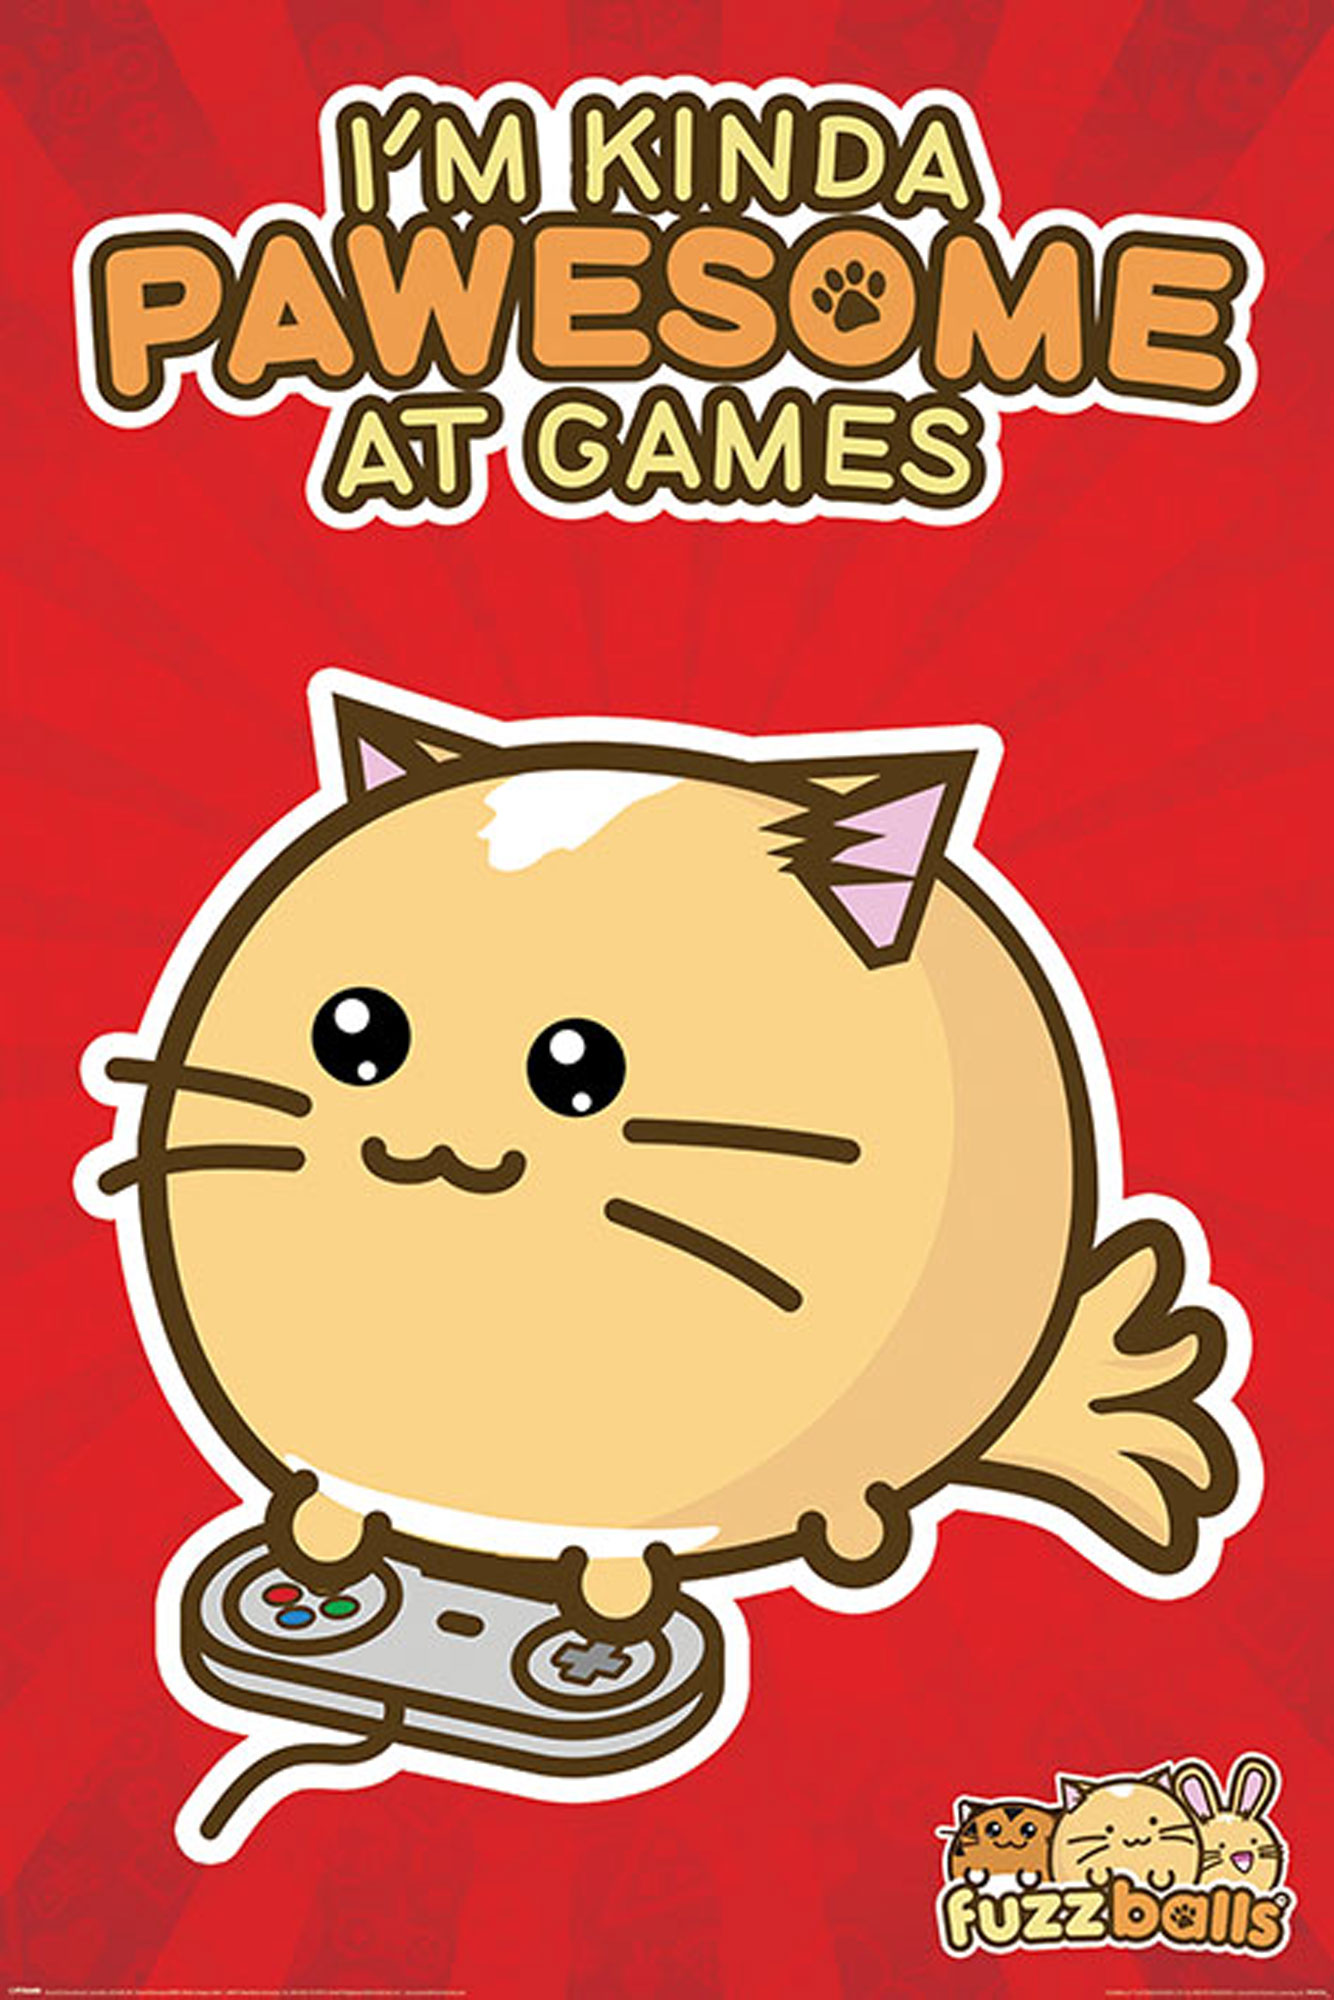 Fuzzballs - Pawsome Gamer